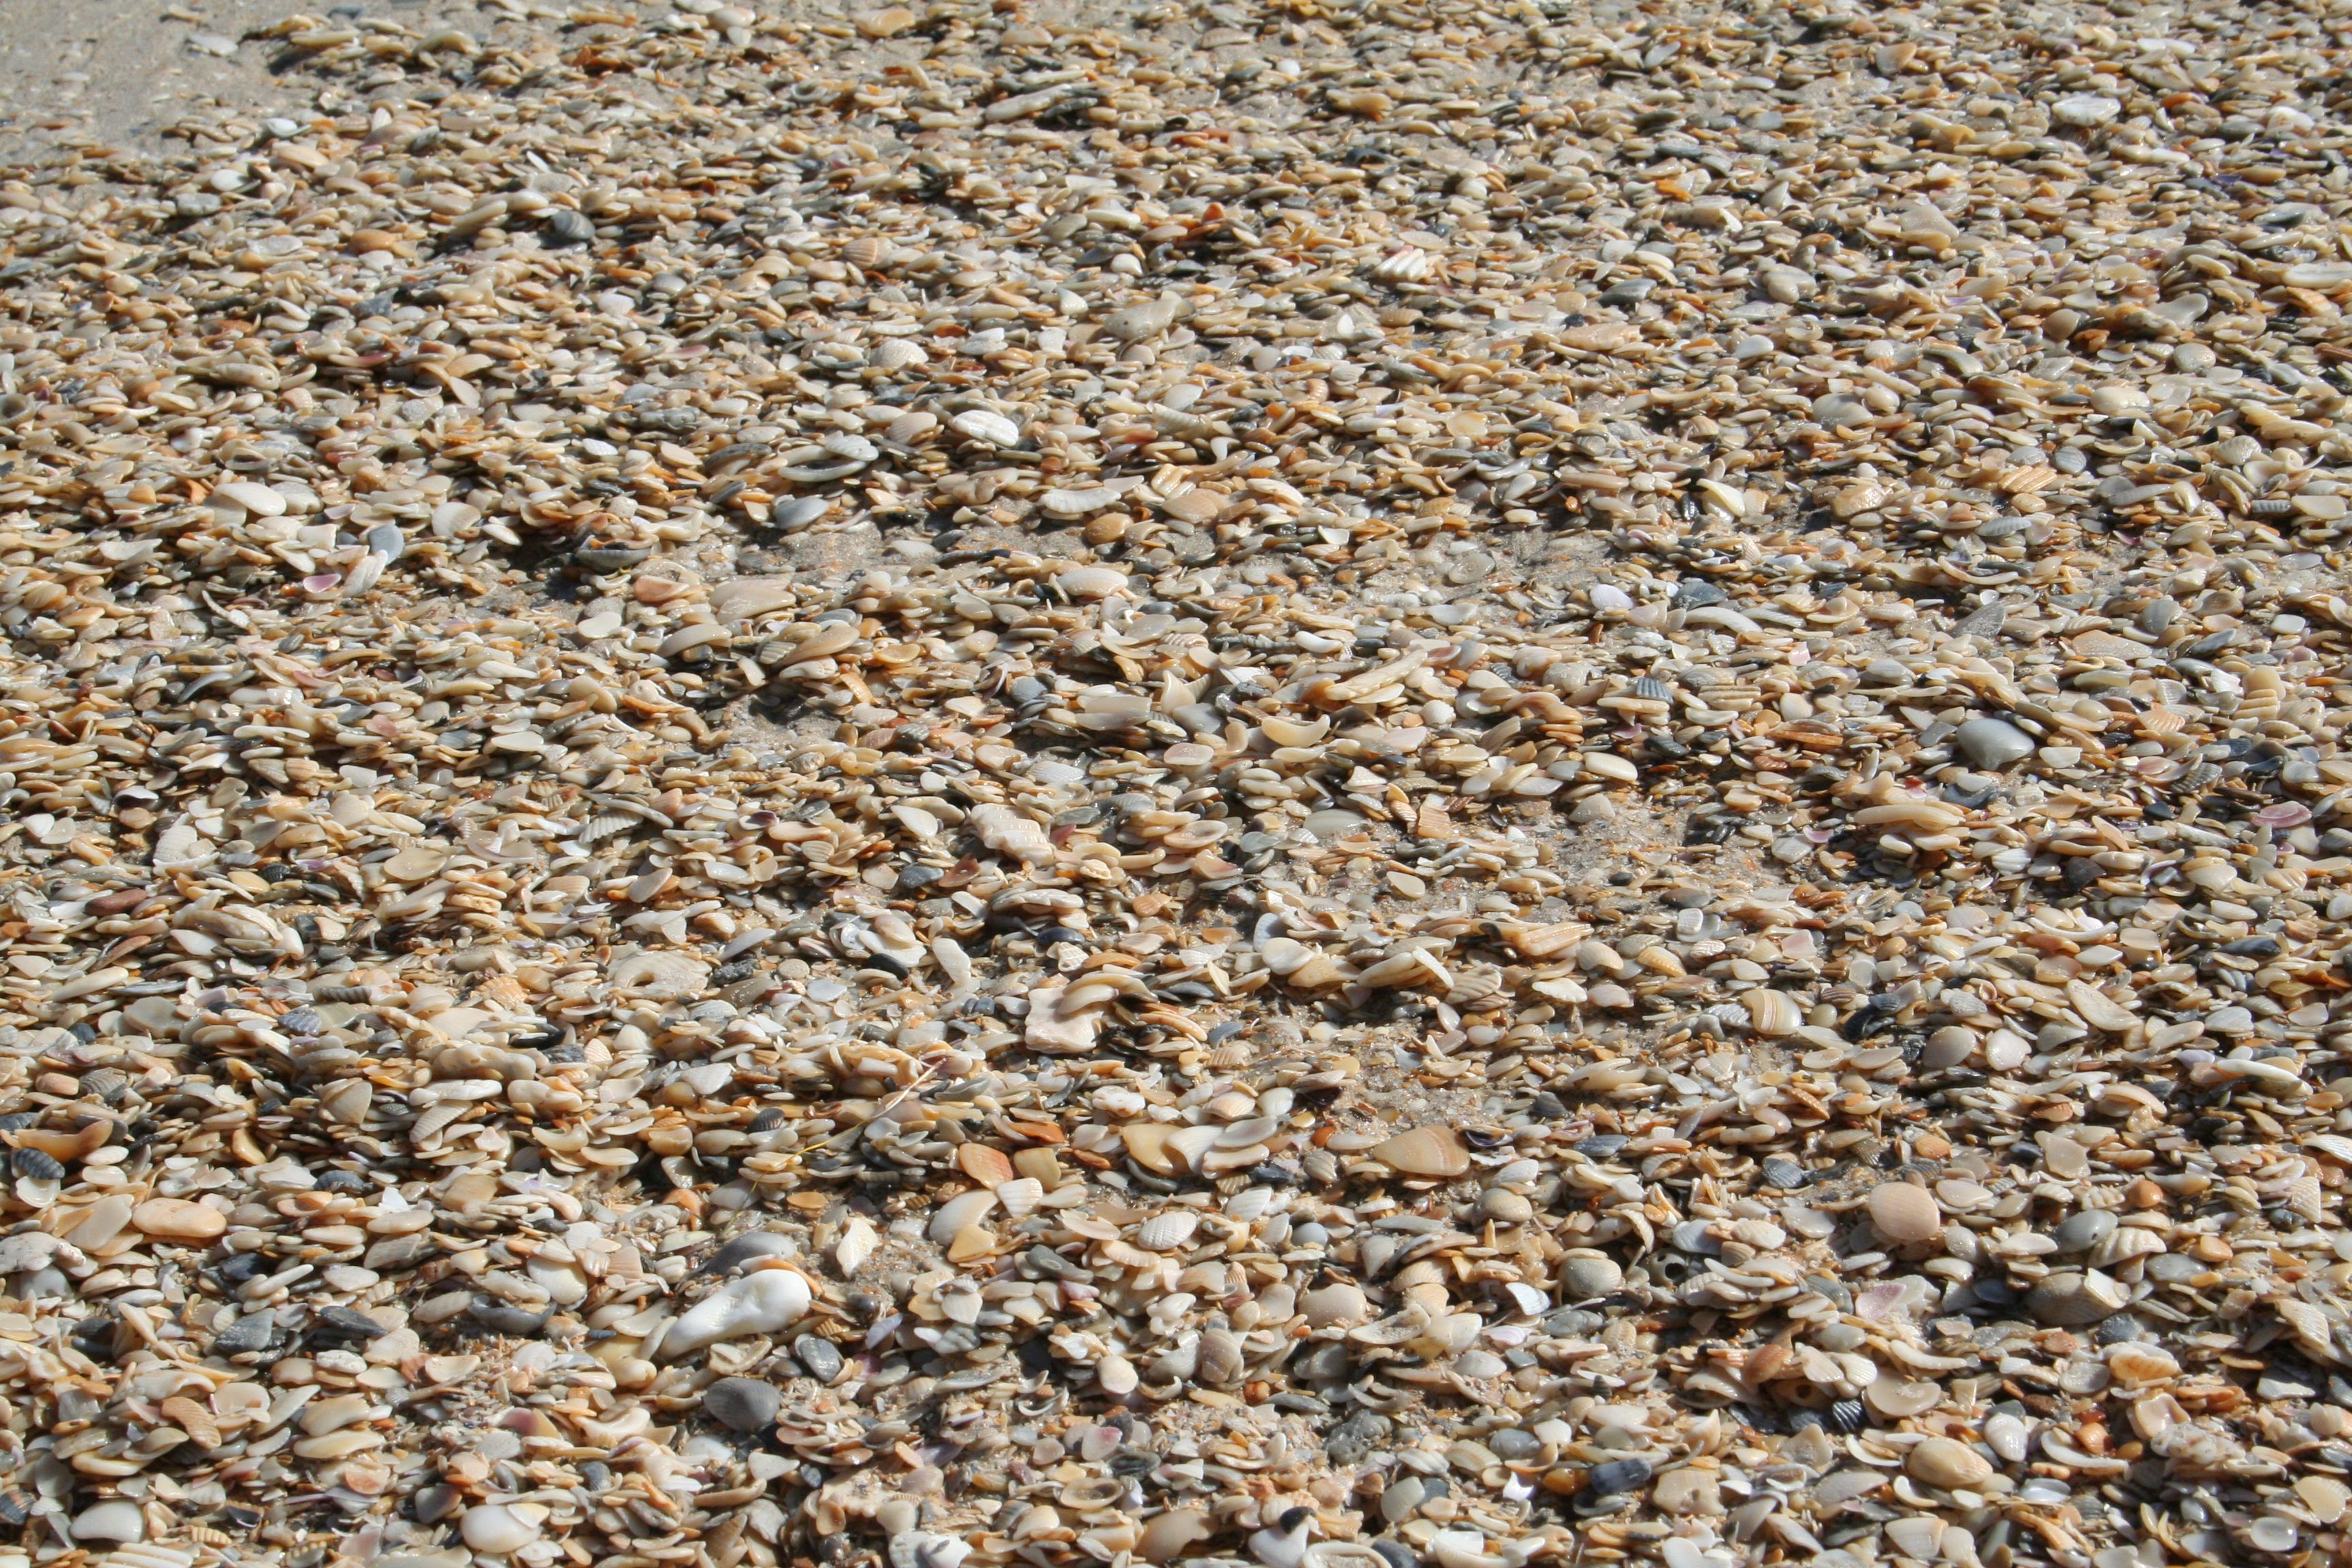 Shell hash at Little Shell Beach, Padre Island National Seashore ...